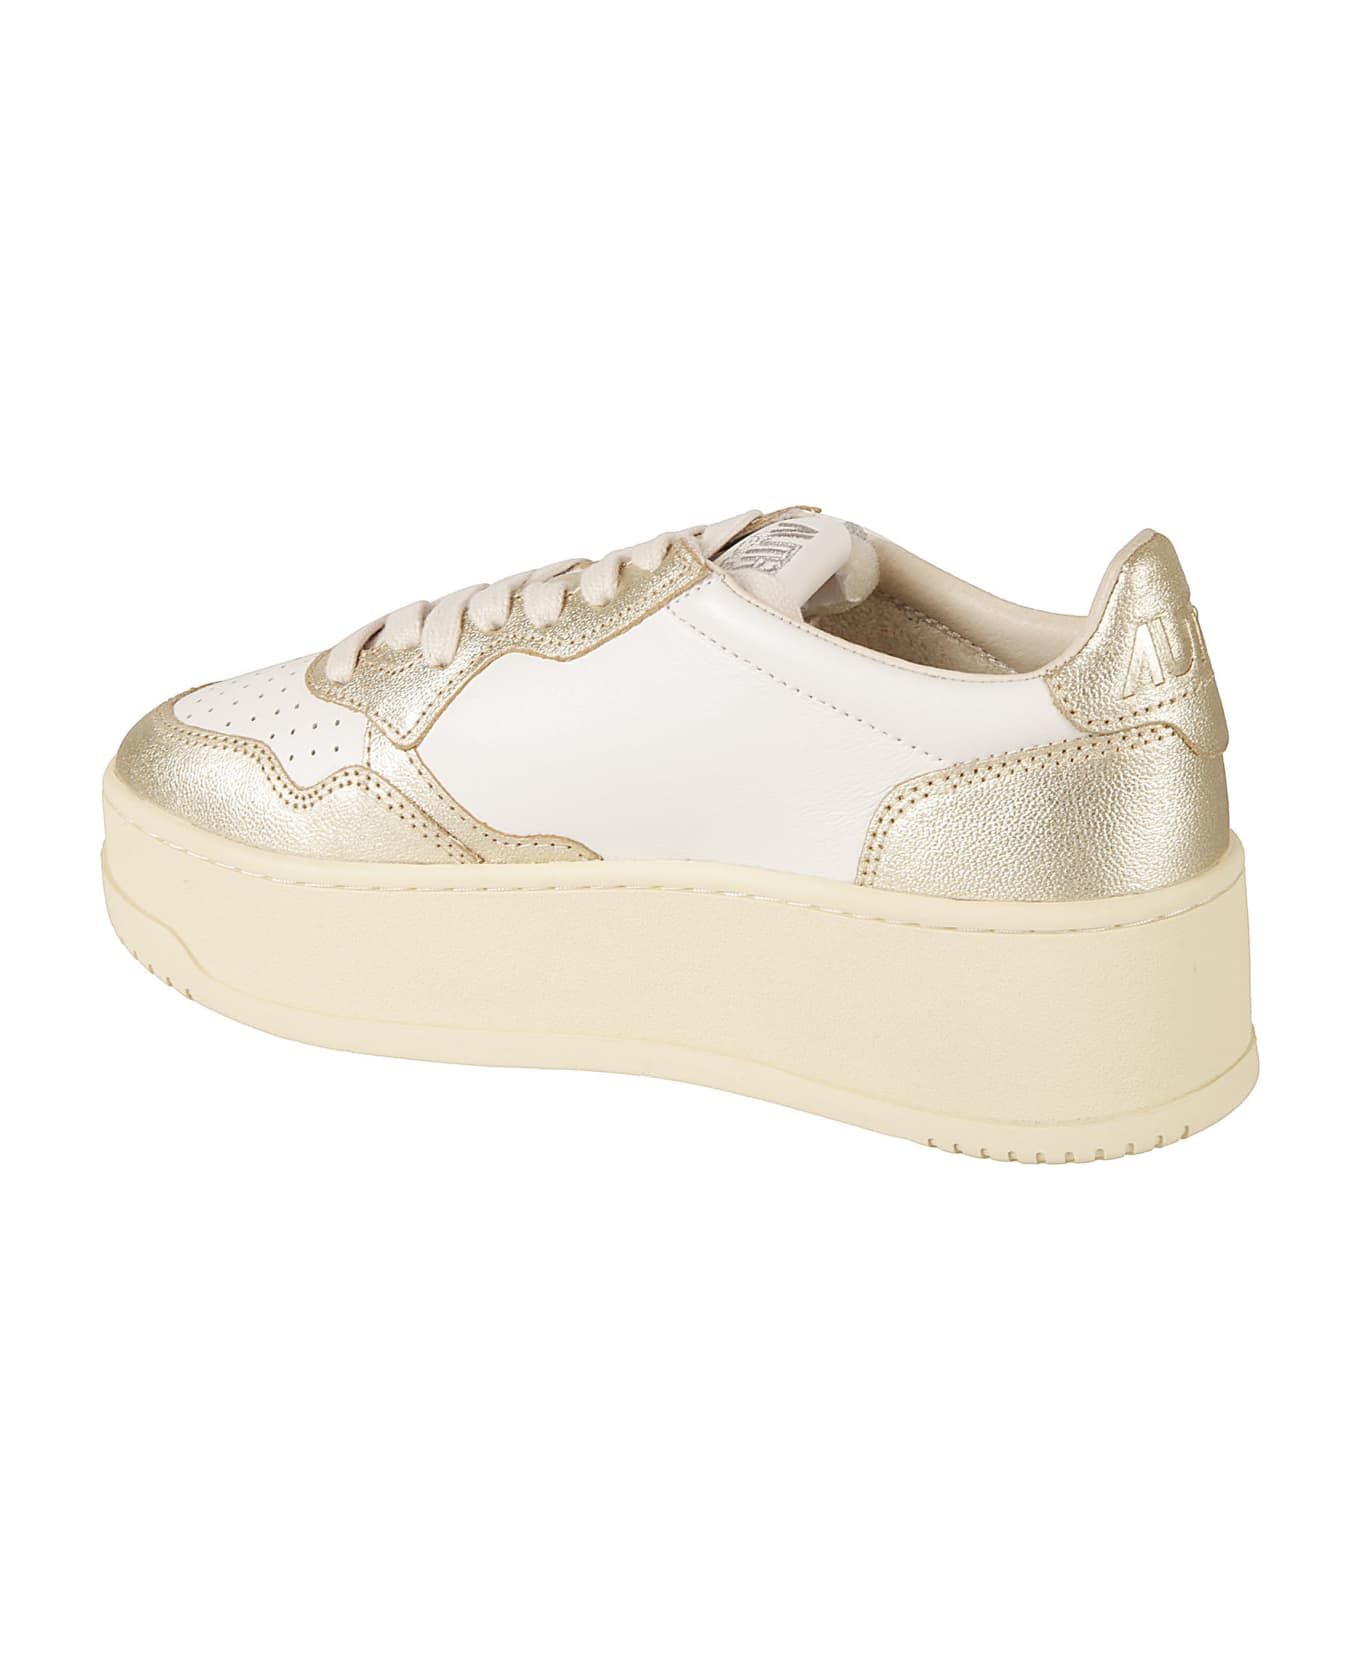 Autry Platform Low Sneakers - White/Platinum